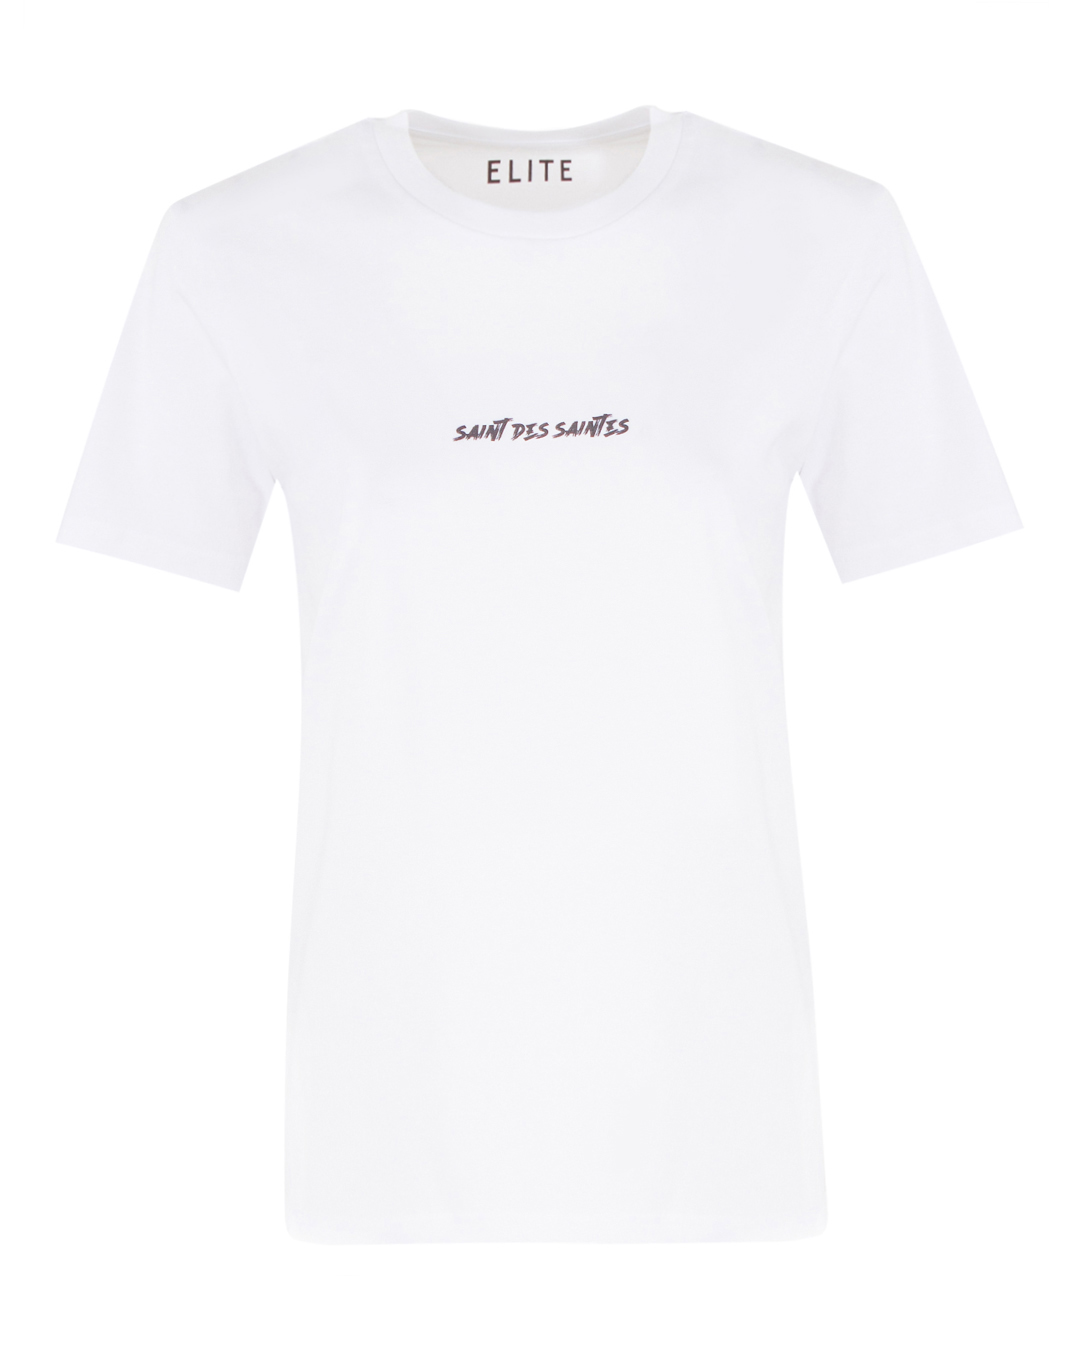 хлопковая футболка Elite fila elite balcoro kd 3xm01794e 048